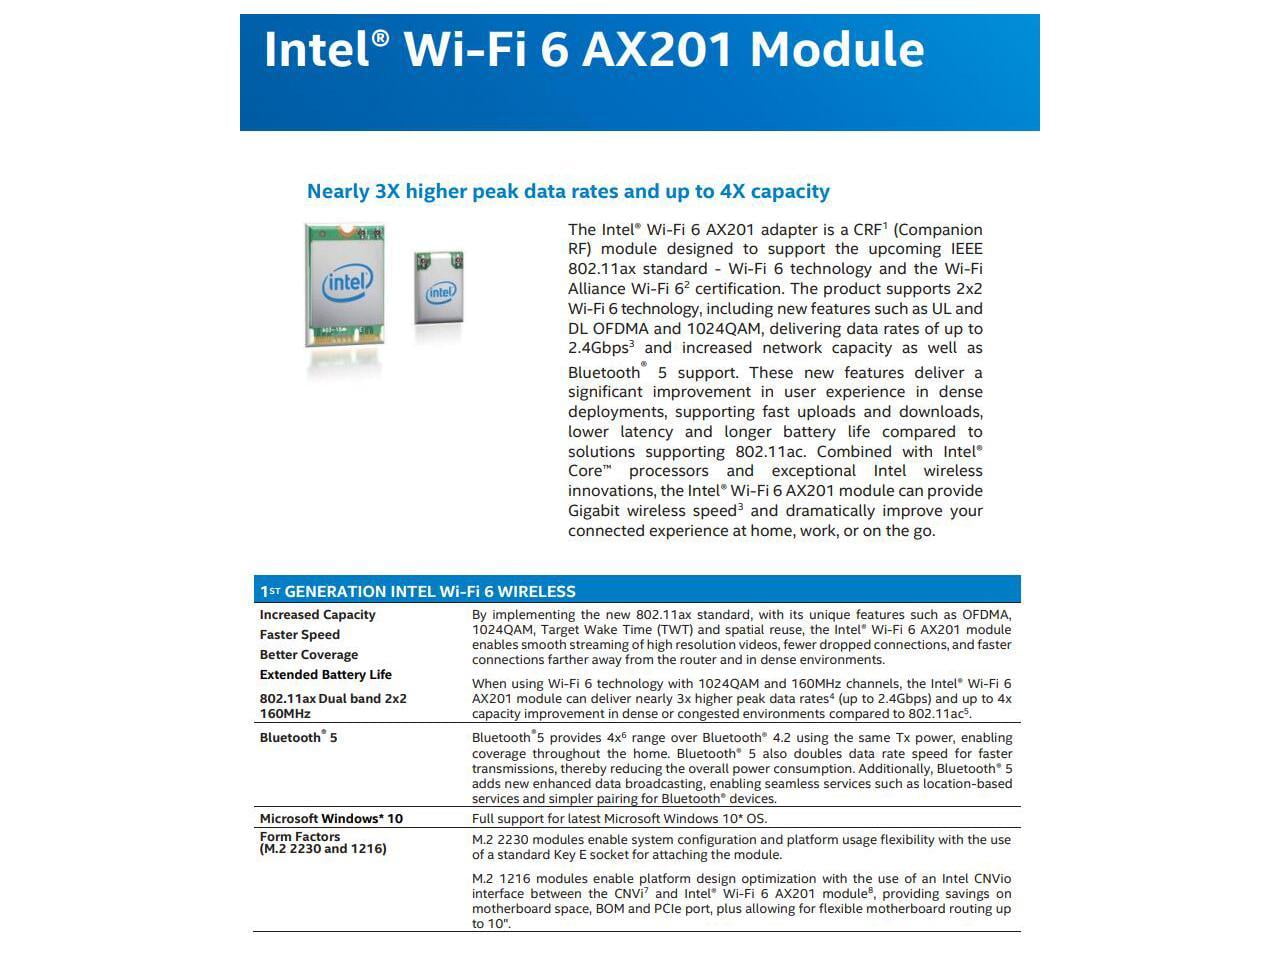 M.2 ,22x30mm,just Support CNVIO Interface AX201 Network Card,Dual Band 2400Mbps Wireless for Wi-Fi 6 AX201 Bluetooth 5.0 NGFF Key E CNVi WiFi Card AX201NGW 2.4Ghz/5Ghz 802.11ac/ax,Interface:NGFF